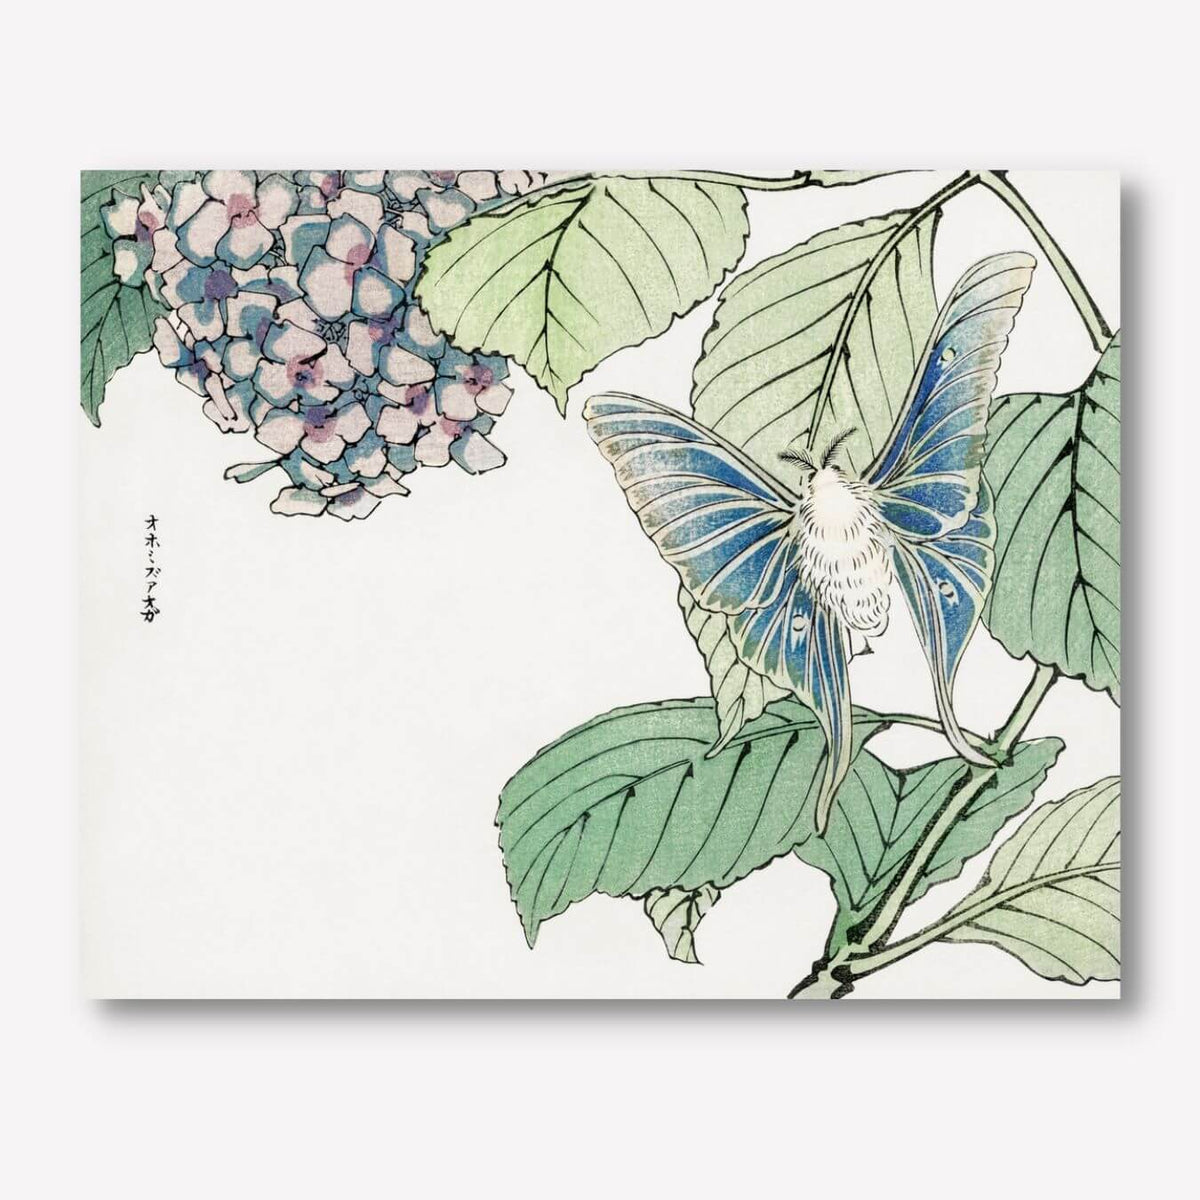 Moth and plant by Morimoto Toko Canvas Wall Art